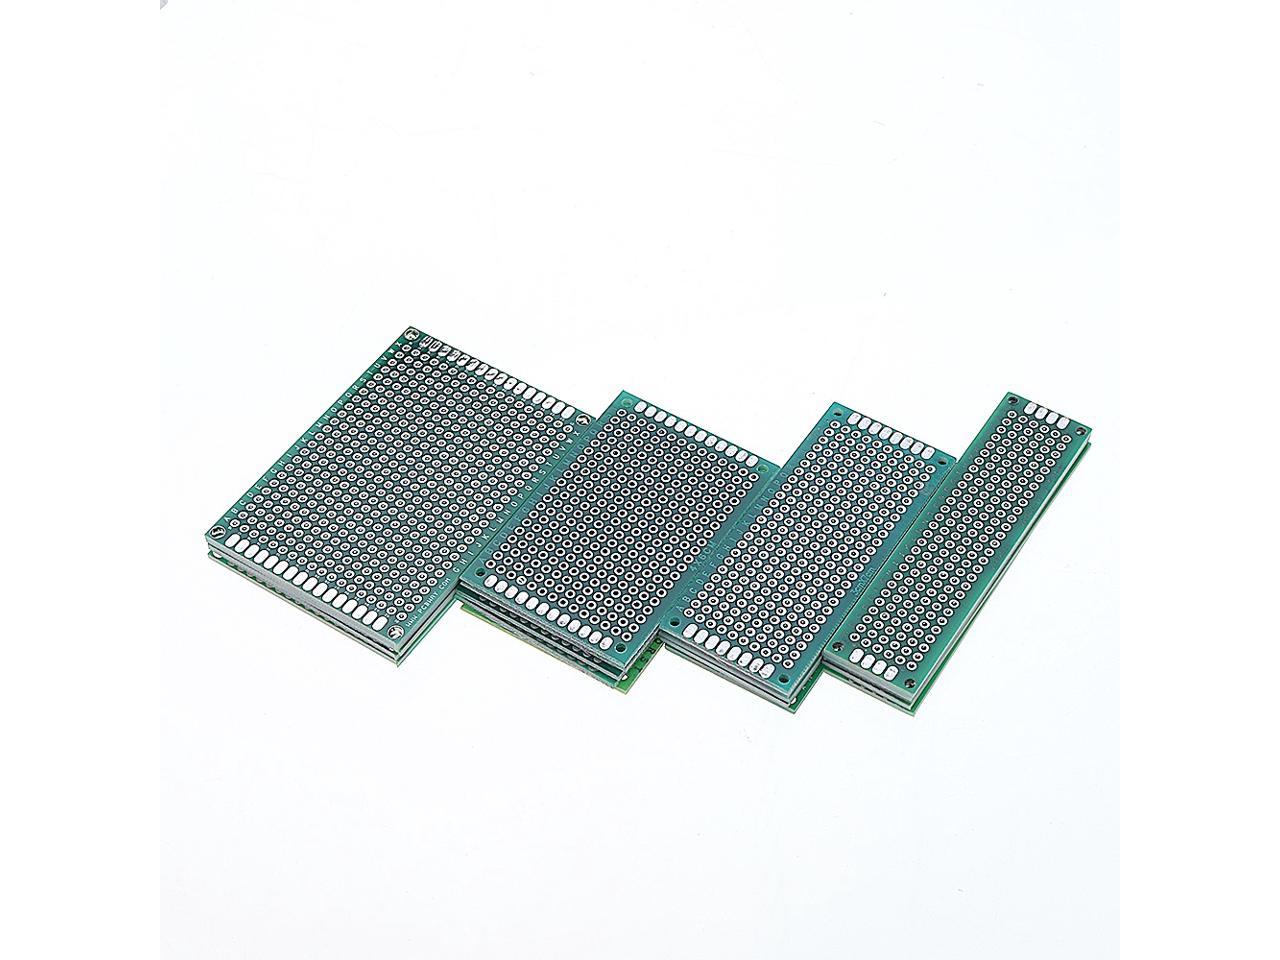 4Pcs 5x7 4x6 3x7 2x8cm Double-Side PCB Board Prototype Kit for DIY Soldering